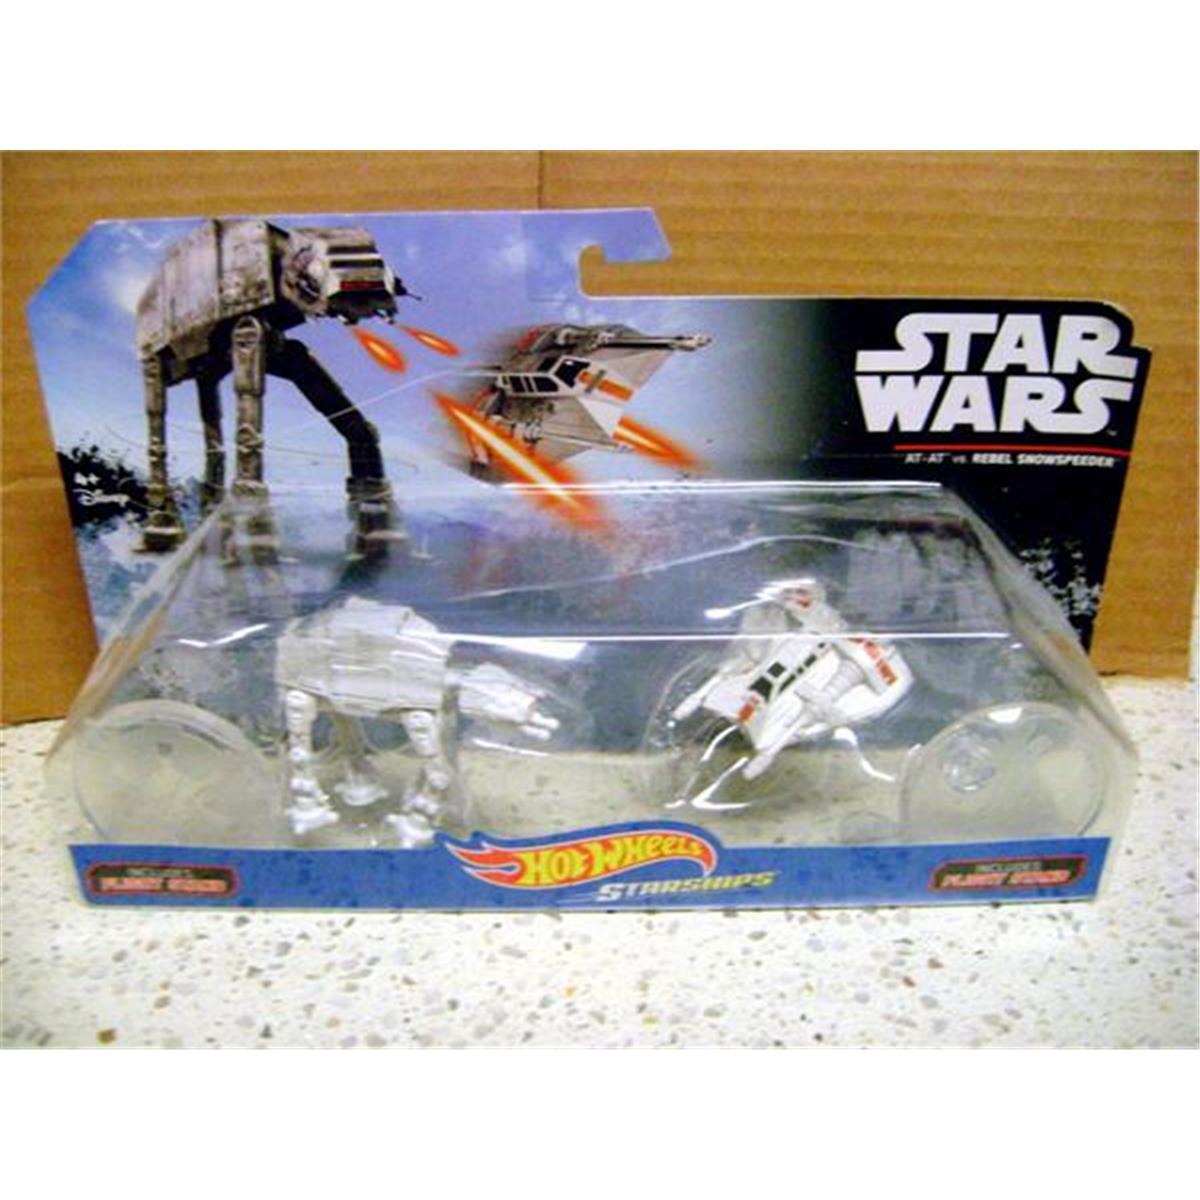 Picture of Autograph Warehouse 637313 6 x 11 in. Imperial Walker Atat Rebel Speeder Star Wars Toy - Micro Hot Wheels Mattel 2015 Nib Box